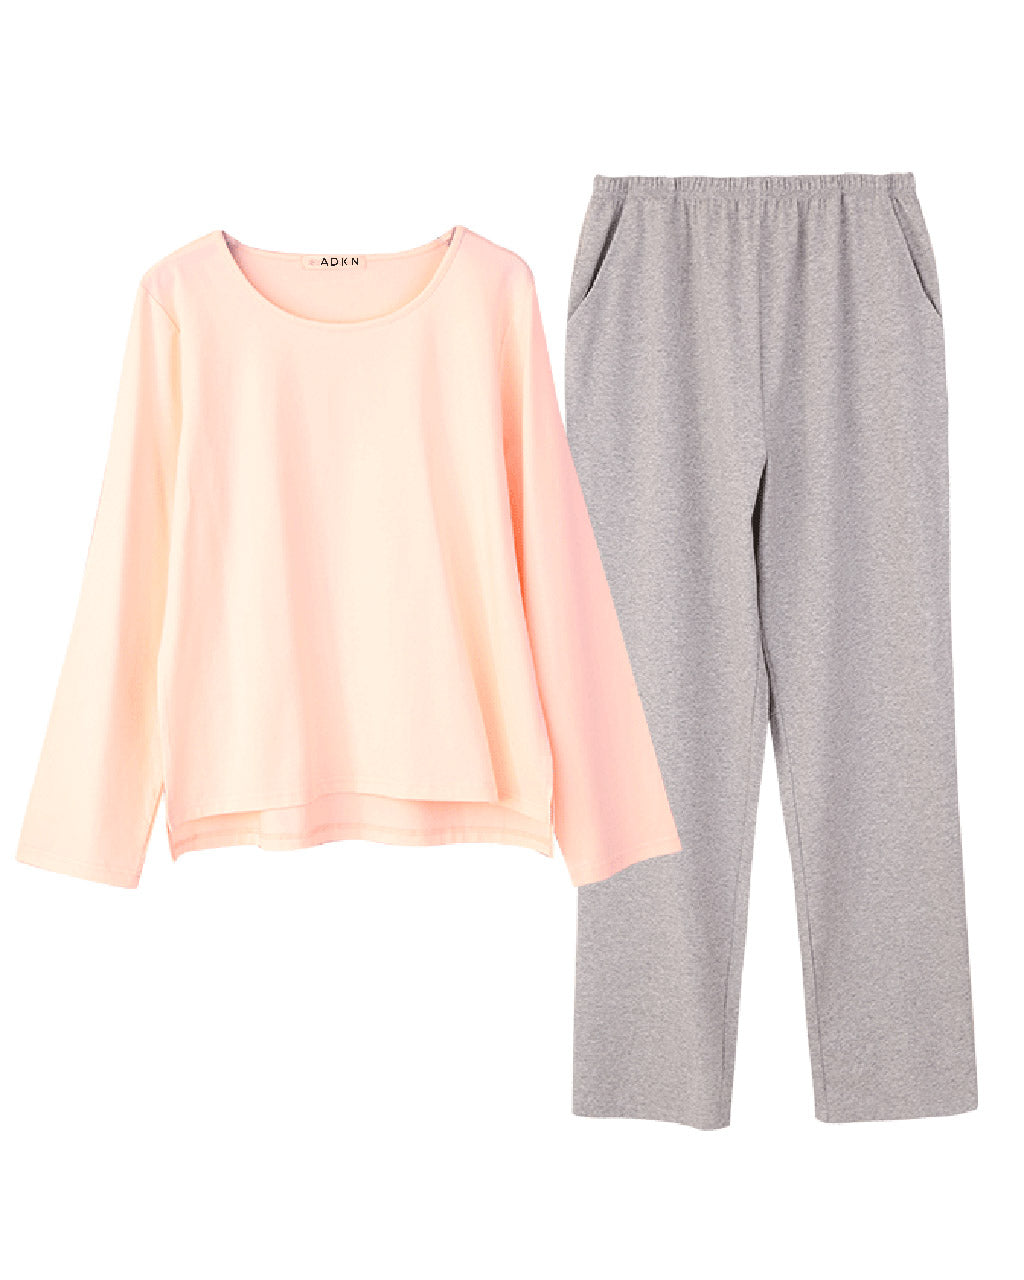 Bamboo and Organic Cotton Pink Pyjamas Loungewear